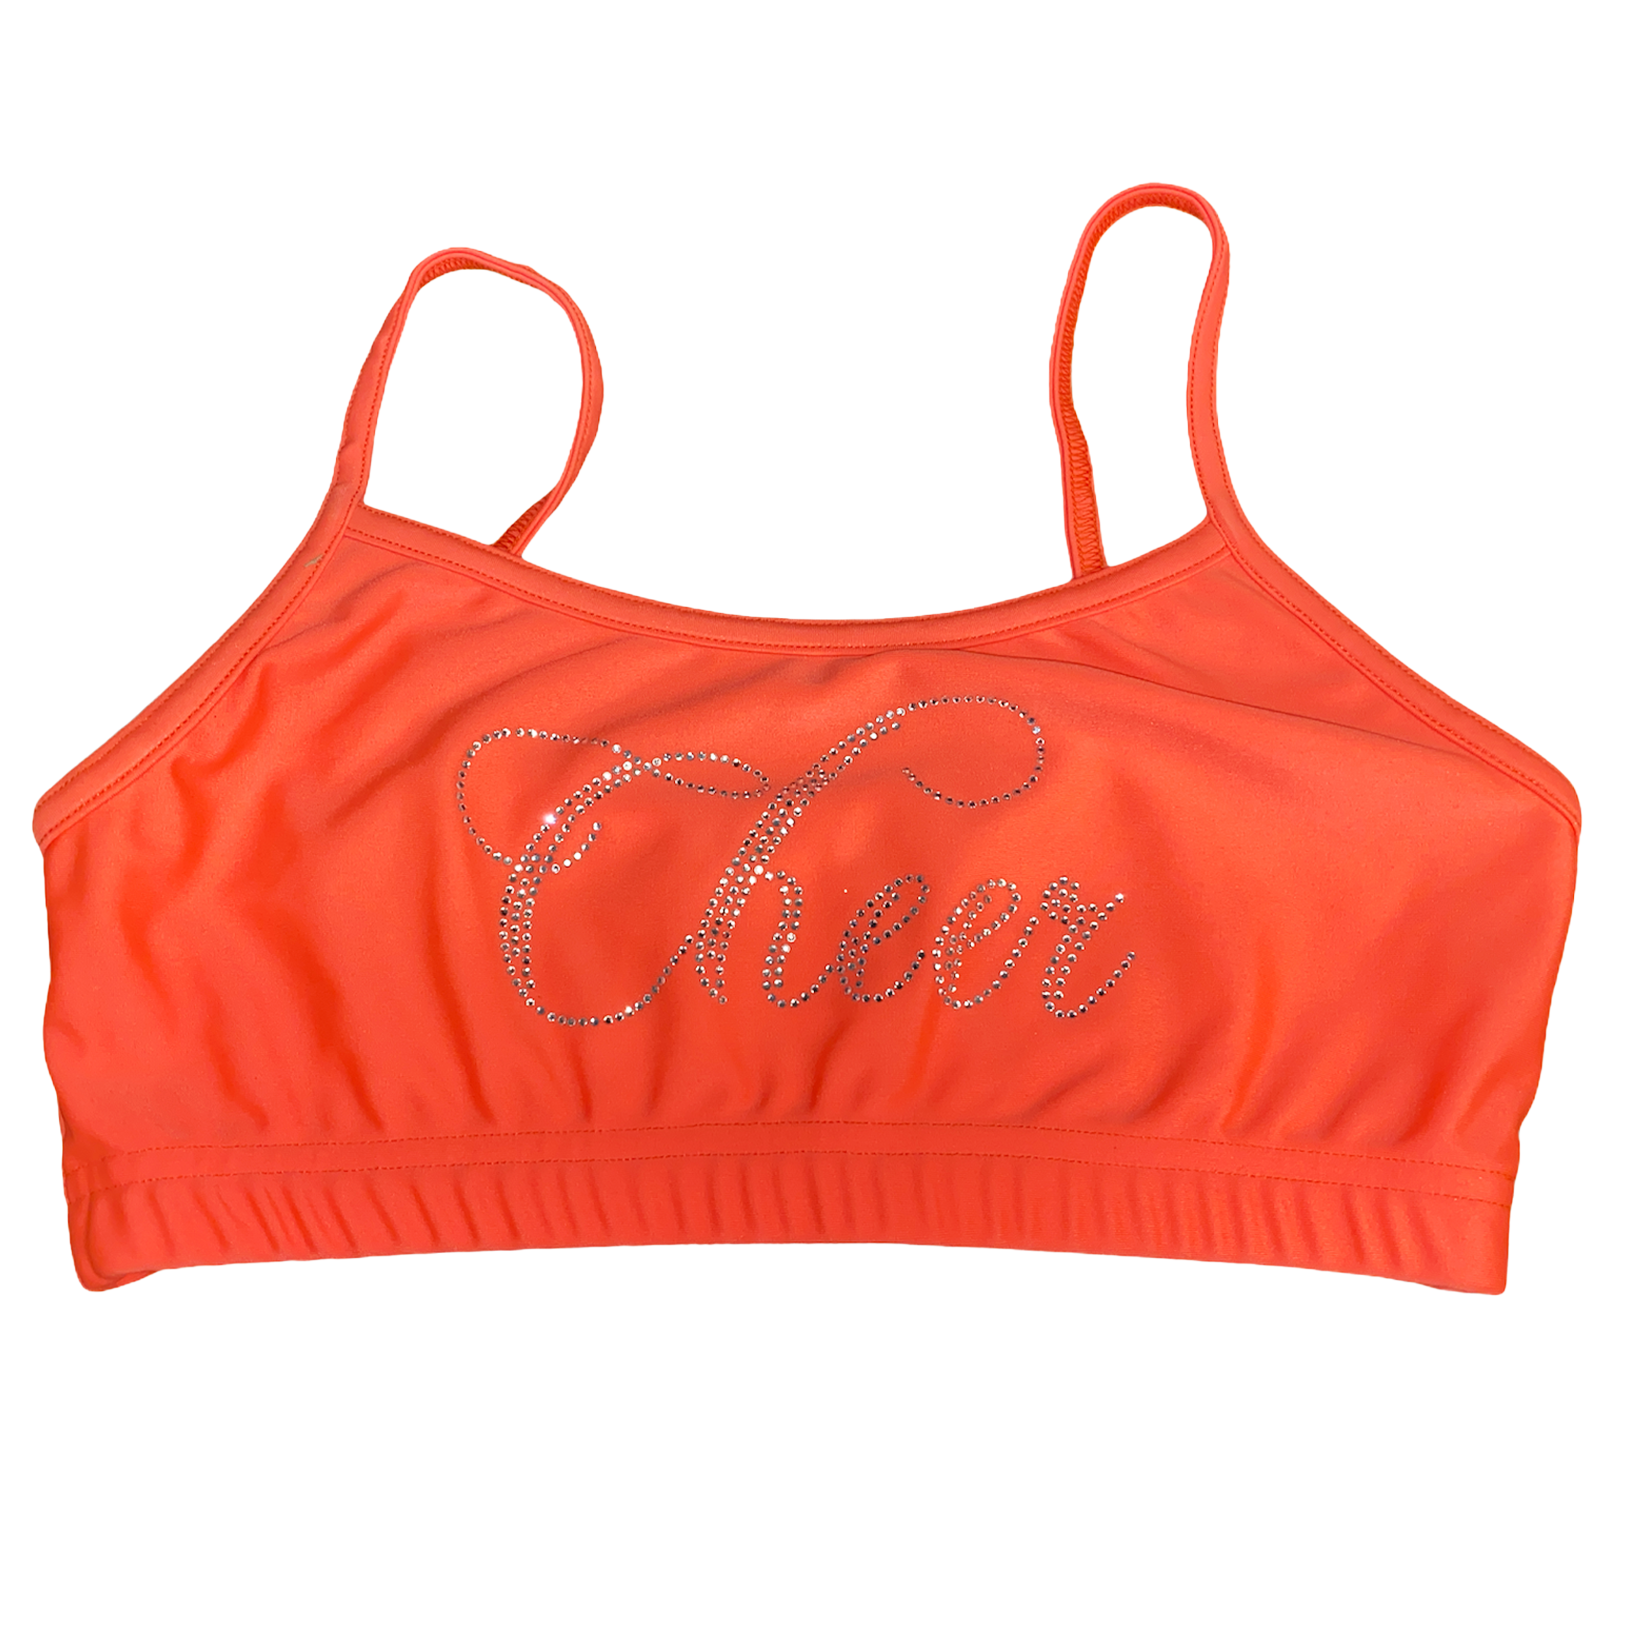 Seamless sports bra - Neon orange/Striped - Ladies